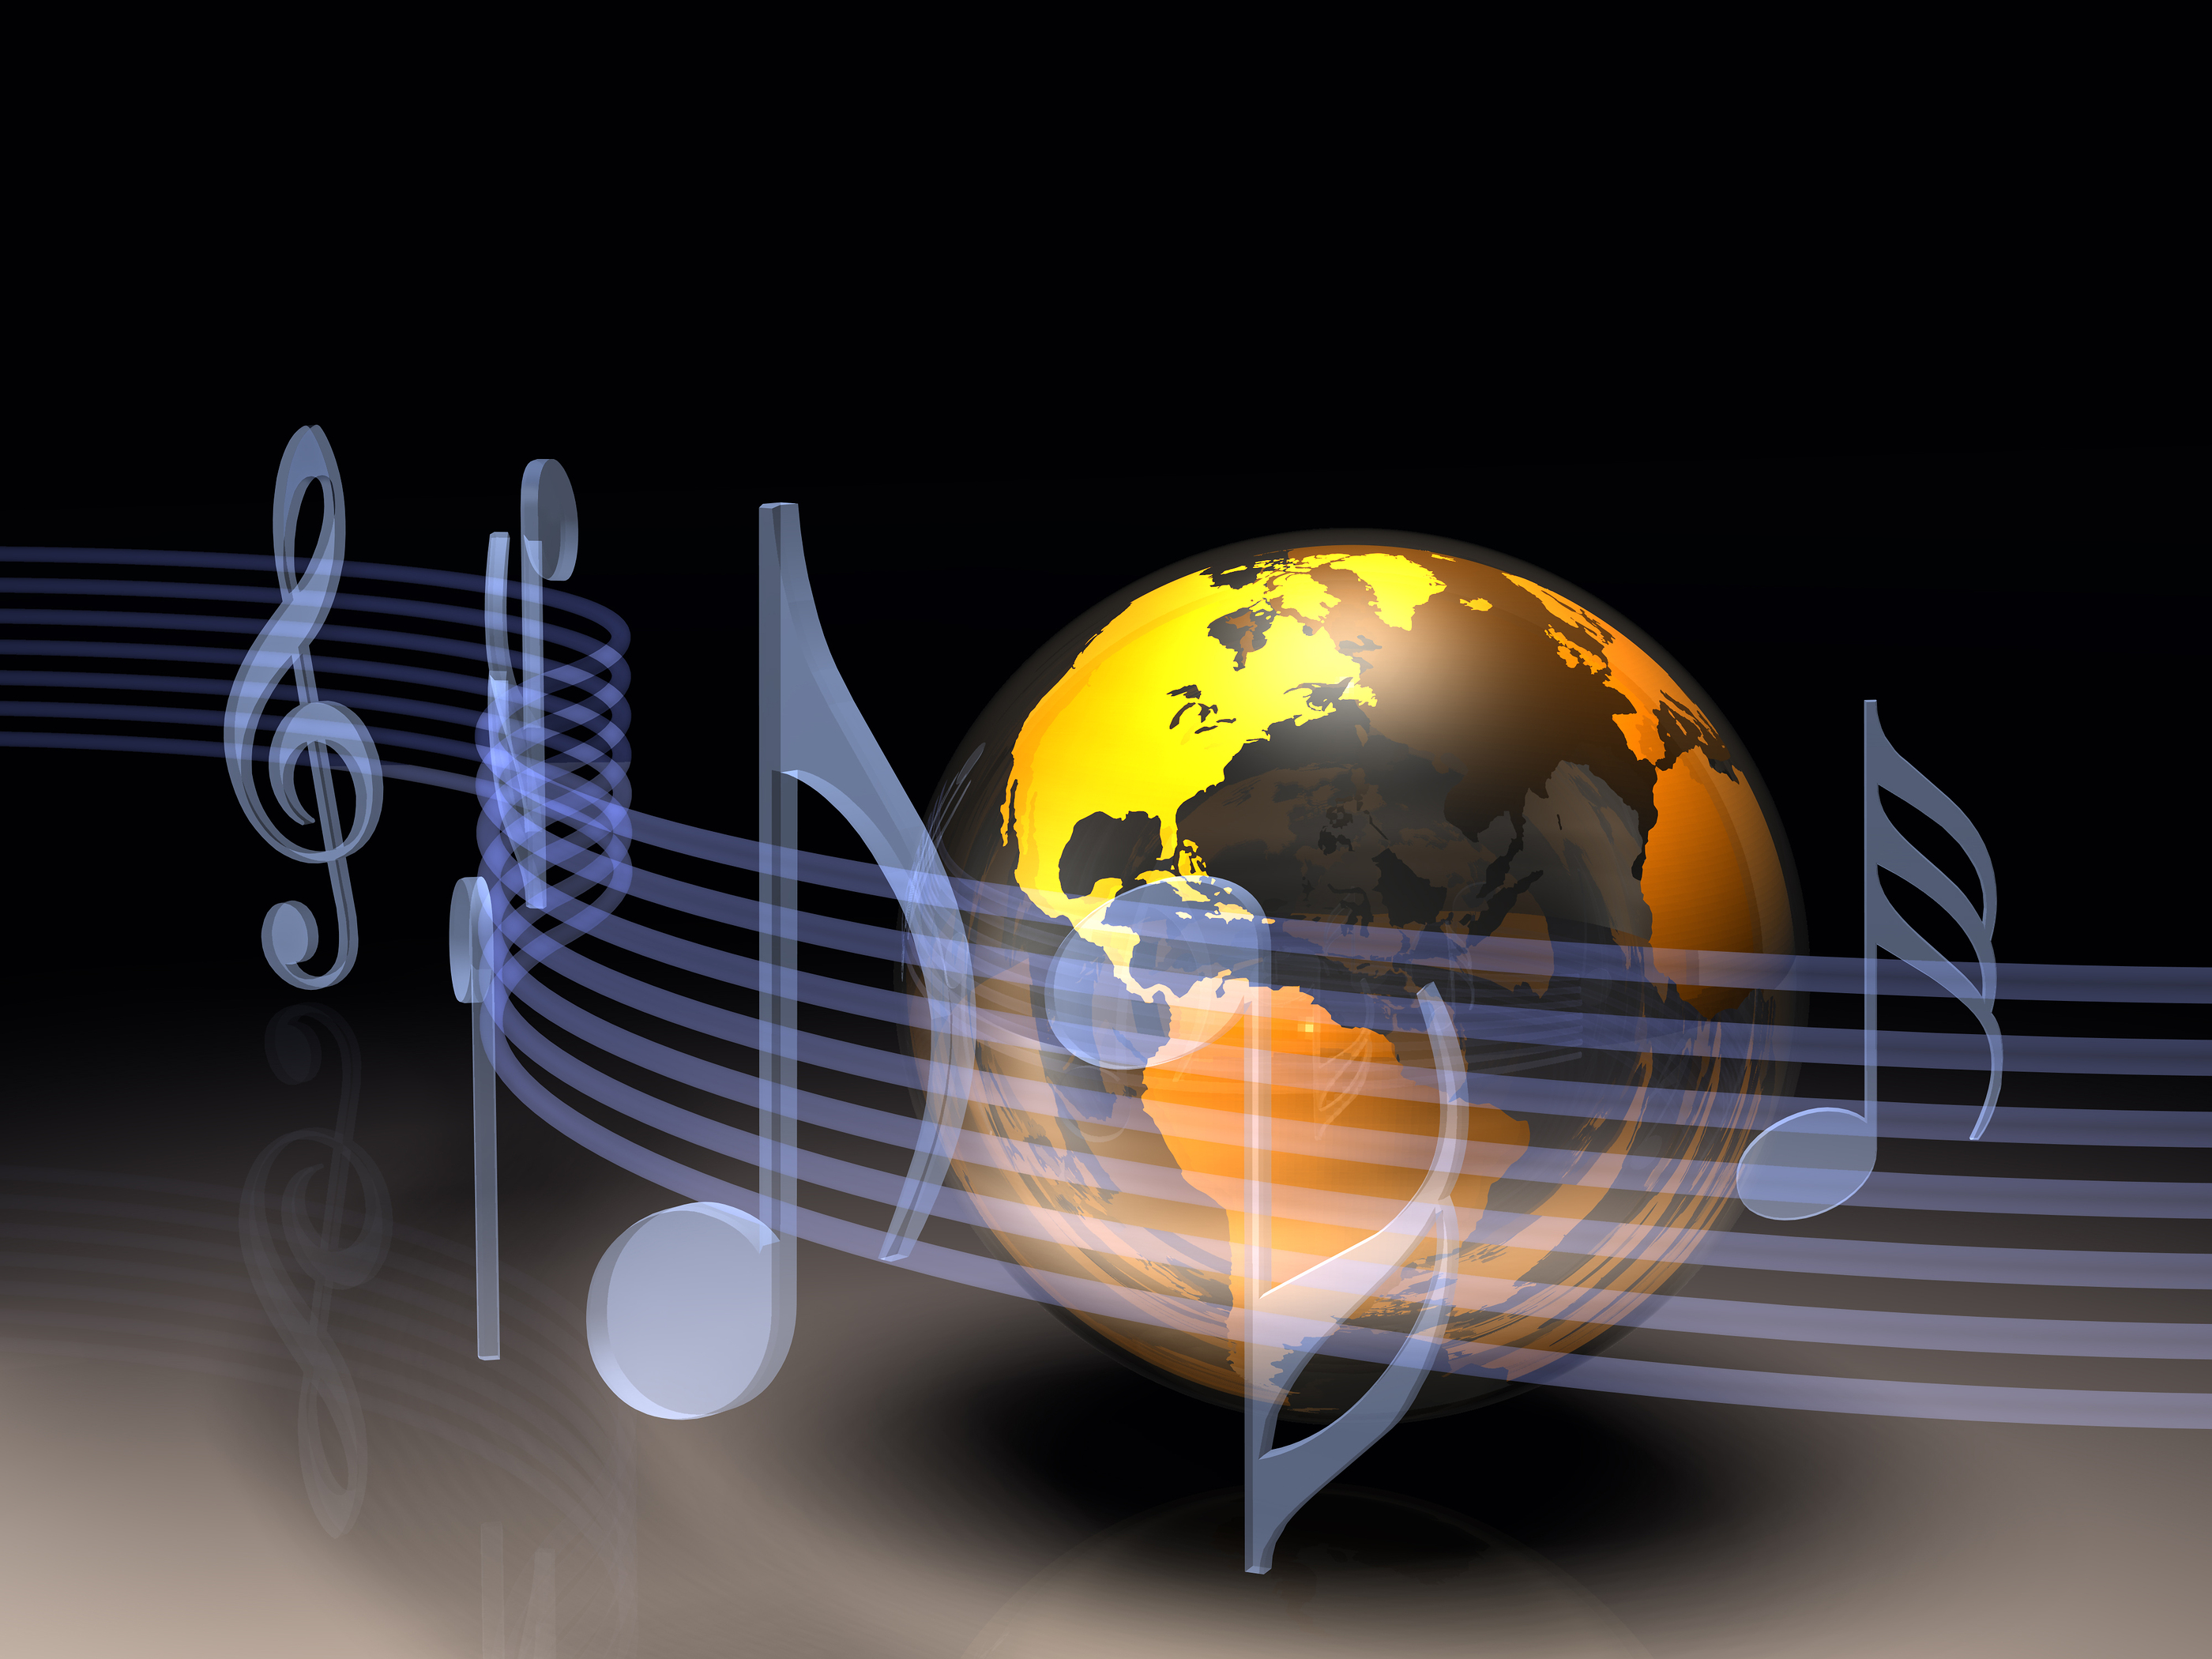 Музыка про мир. Музыкальная Планета. Музыкальный мир. Земной шар музыкальный. Музыкальная география.